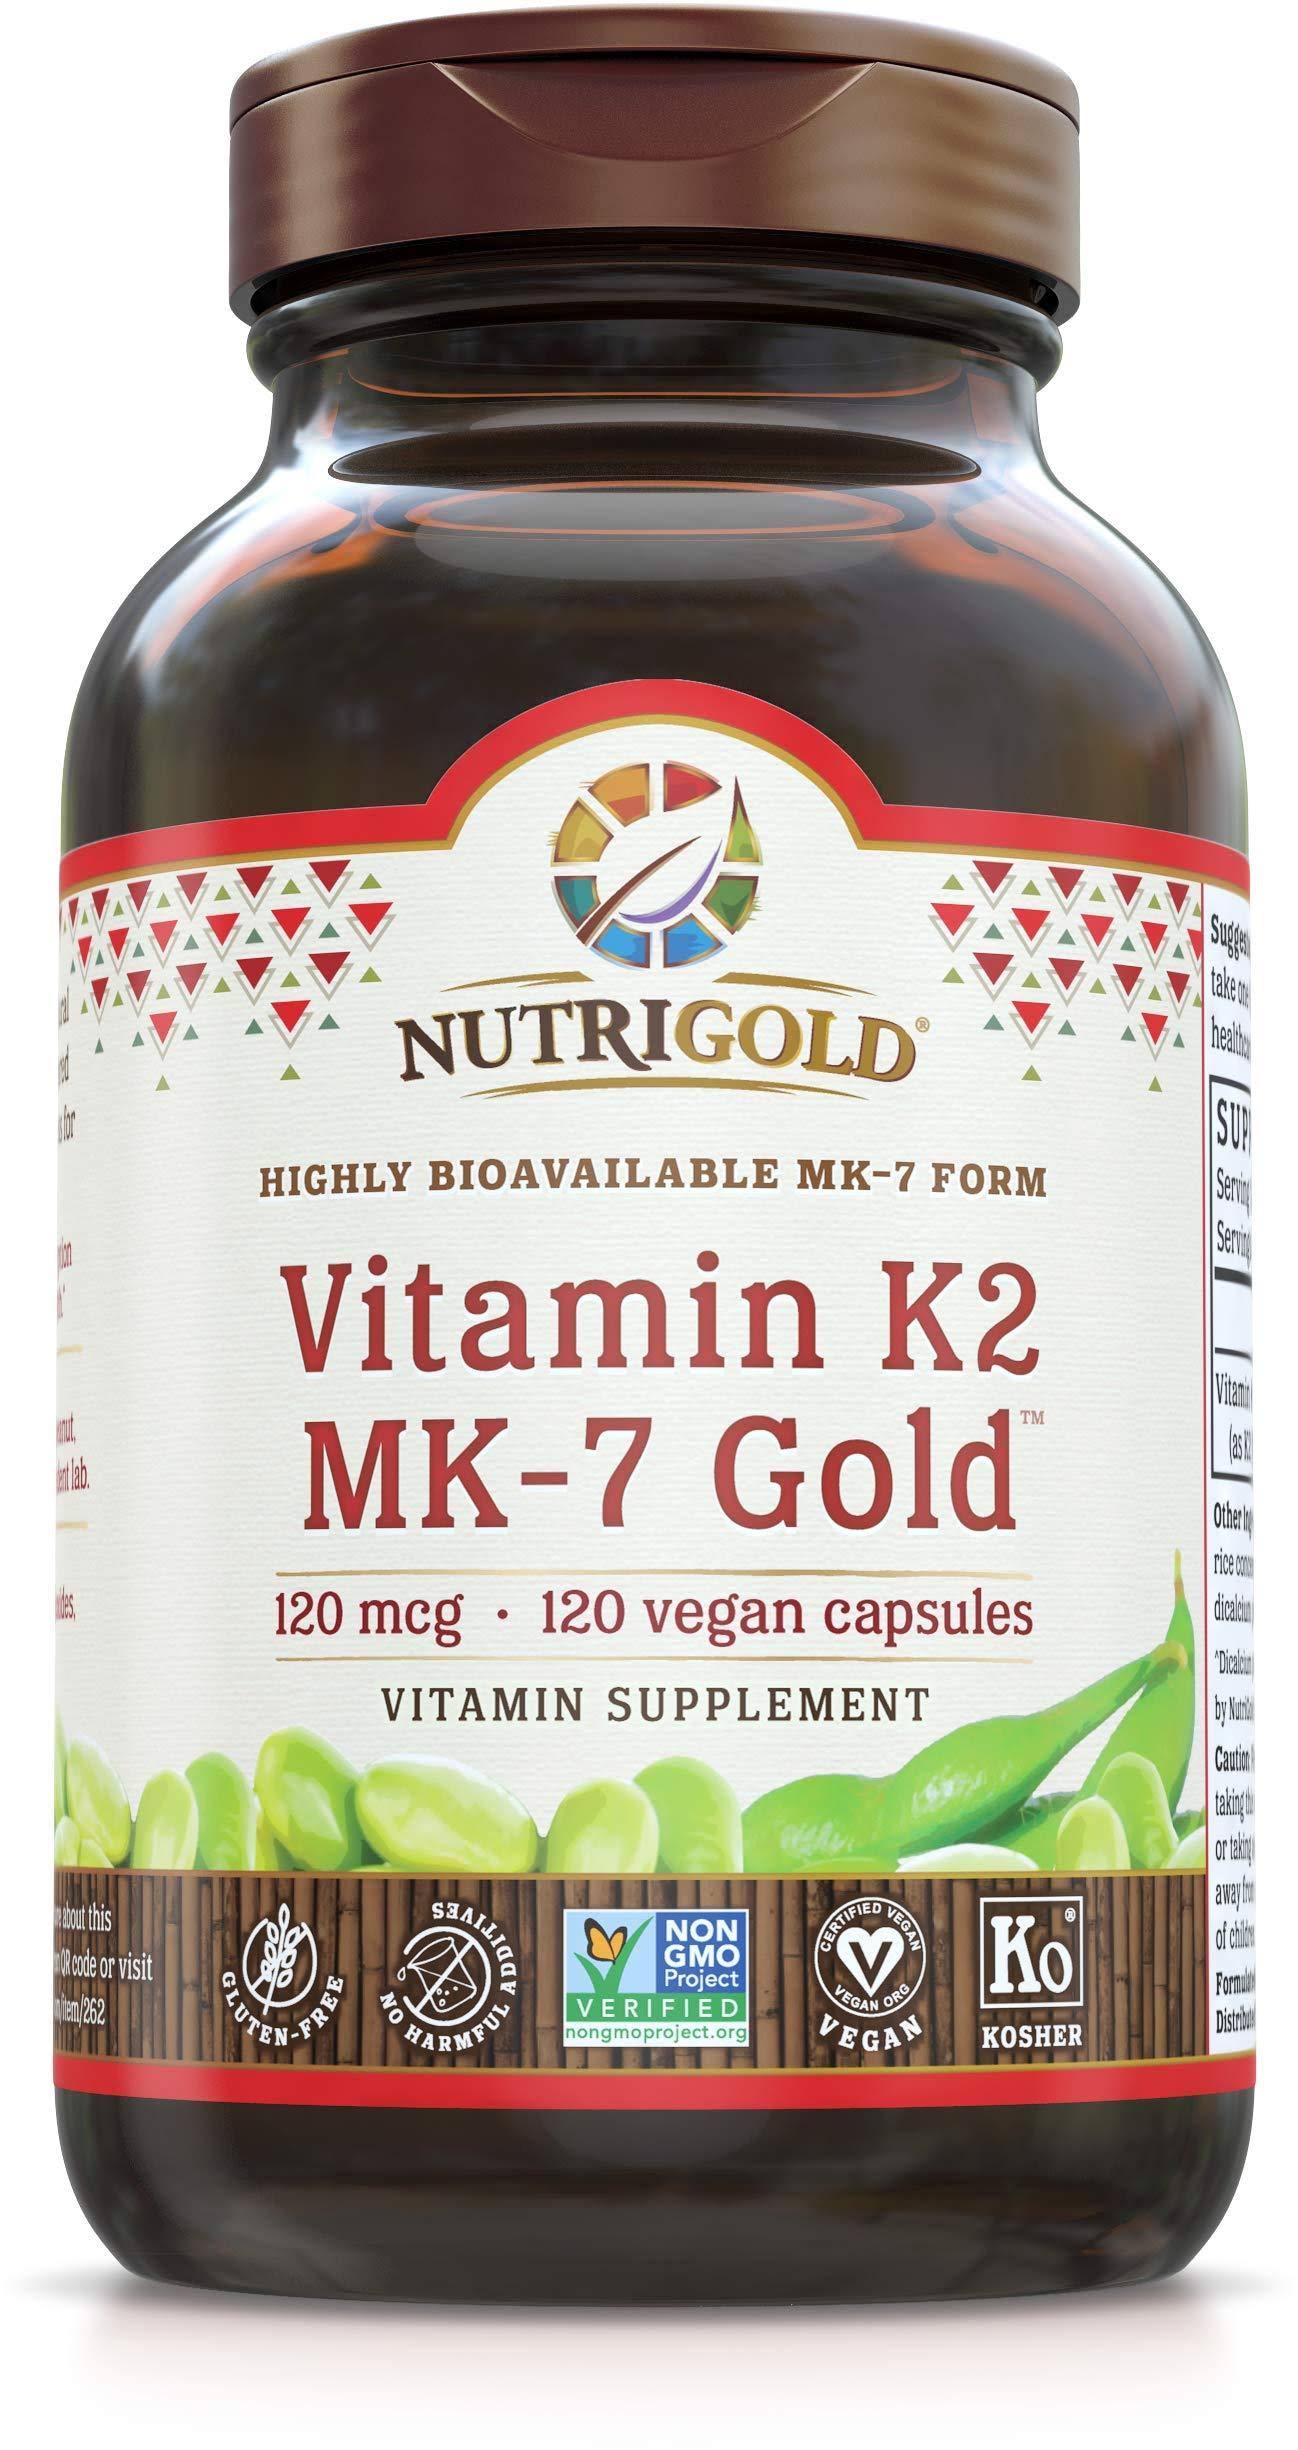 Nutrigold Vitamin K2 Mk-7 Gold Supplement - 100mcg, 120 Vegetarian Capsules